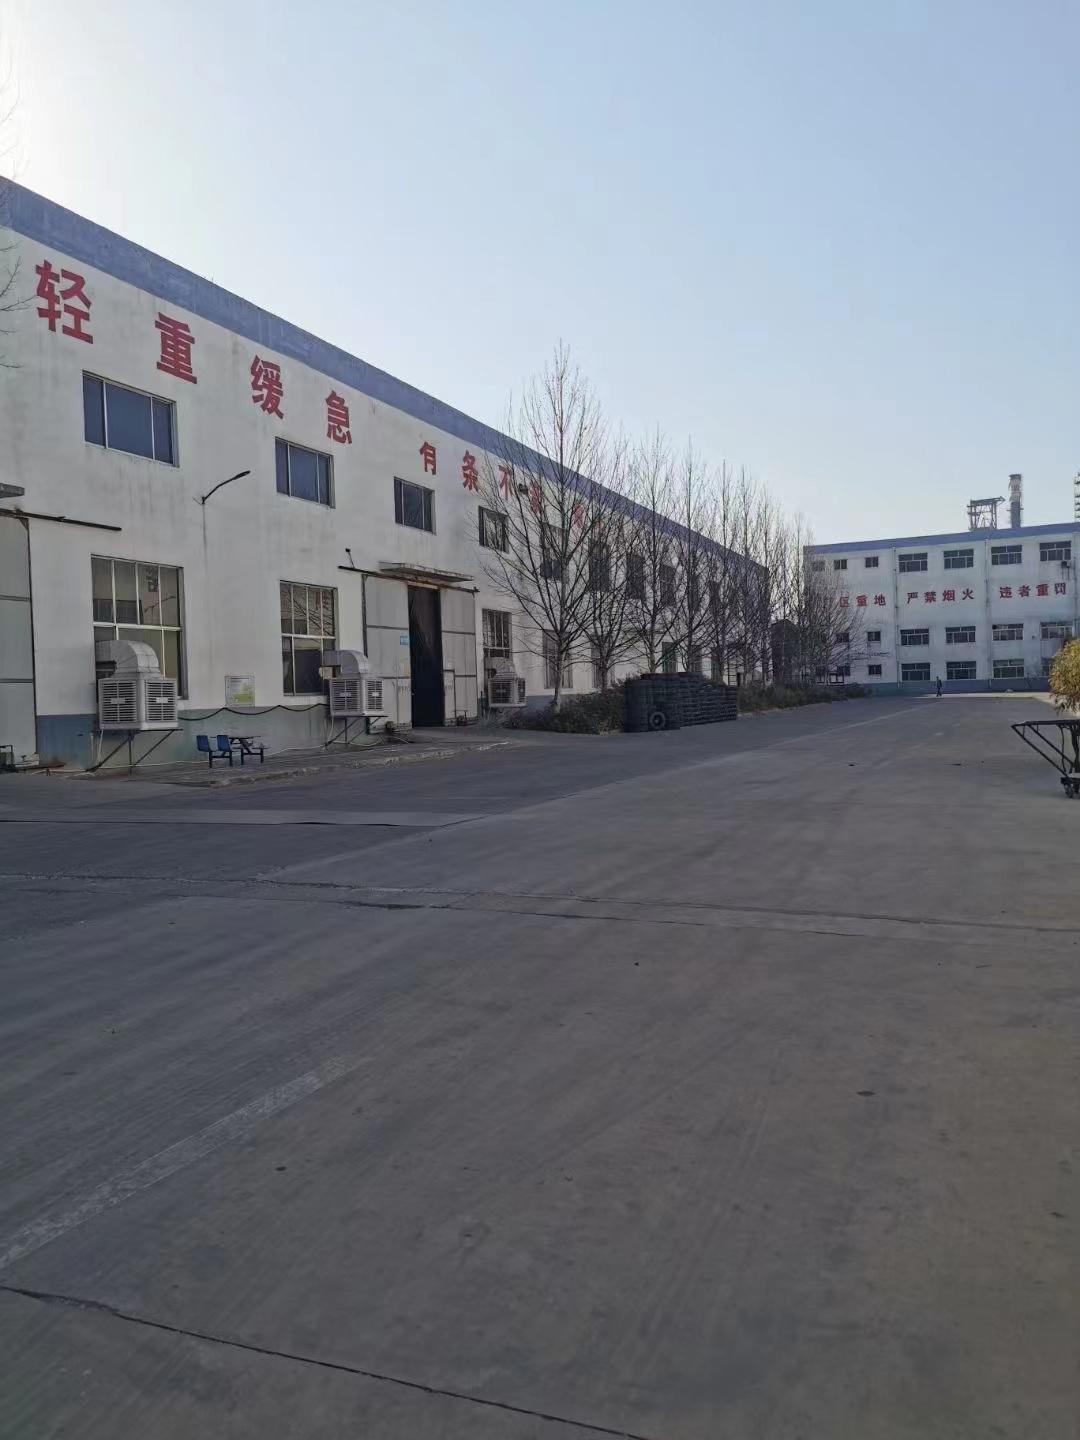     Gaomi Shengjia Tire Co., Ltd